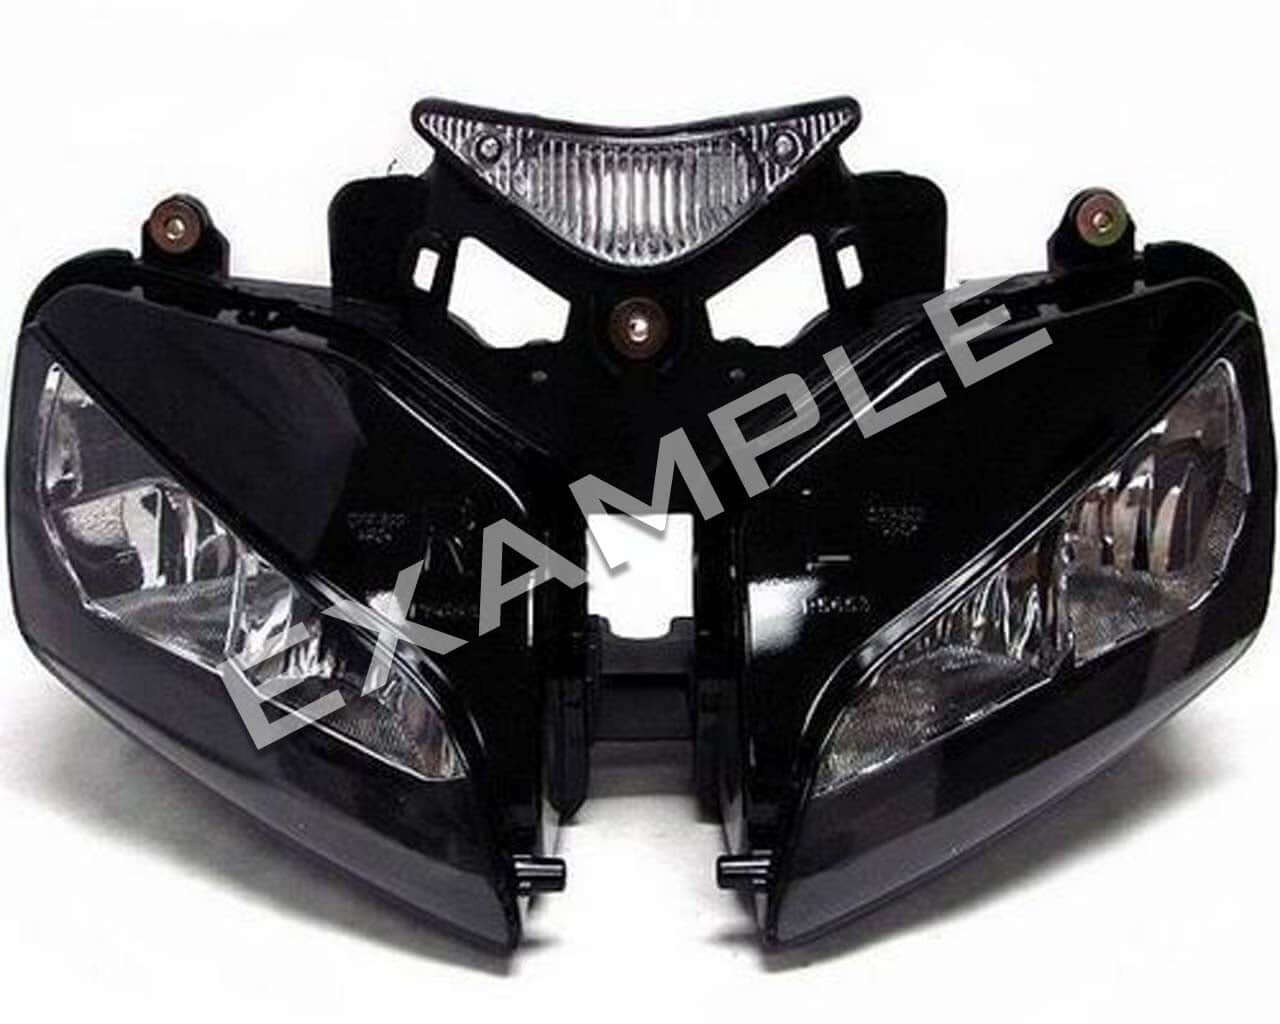 Honda CBR1000RR 03-07 HID bi-xenon headlight upgrade kit